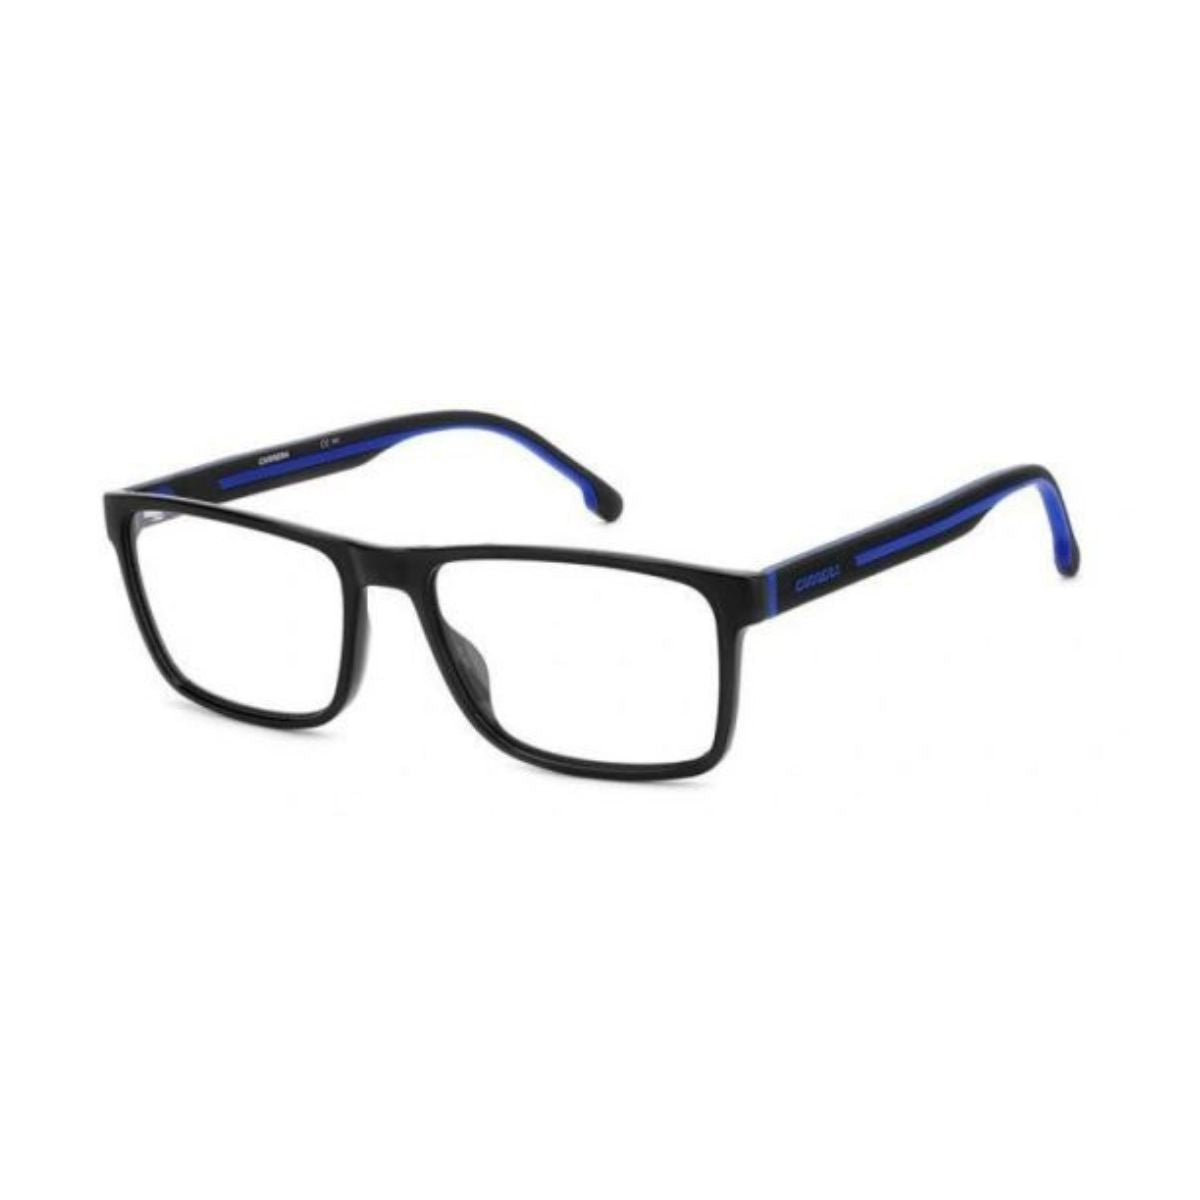 "buy Carrera CAPRW 3/IN D51 eyesight glasses frame for men and women at optorium"